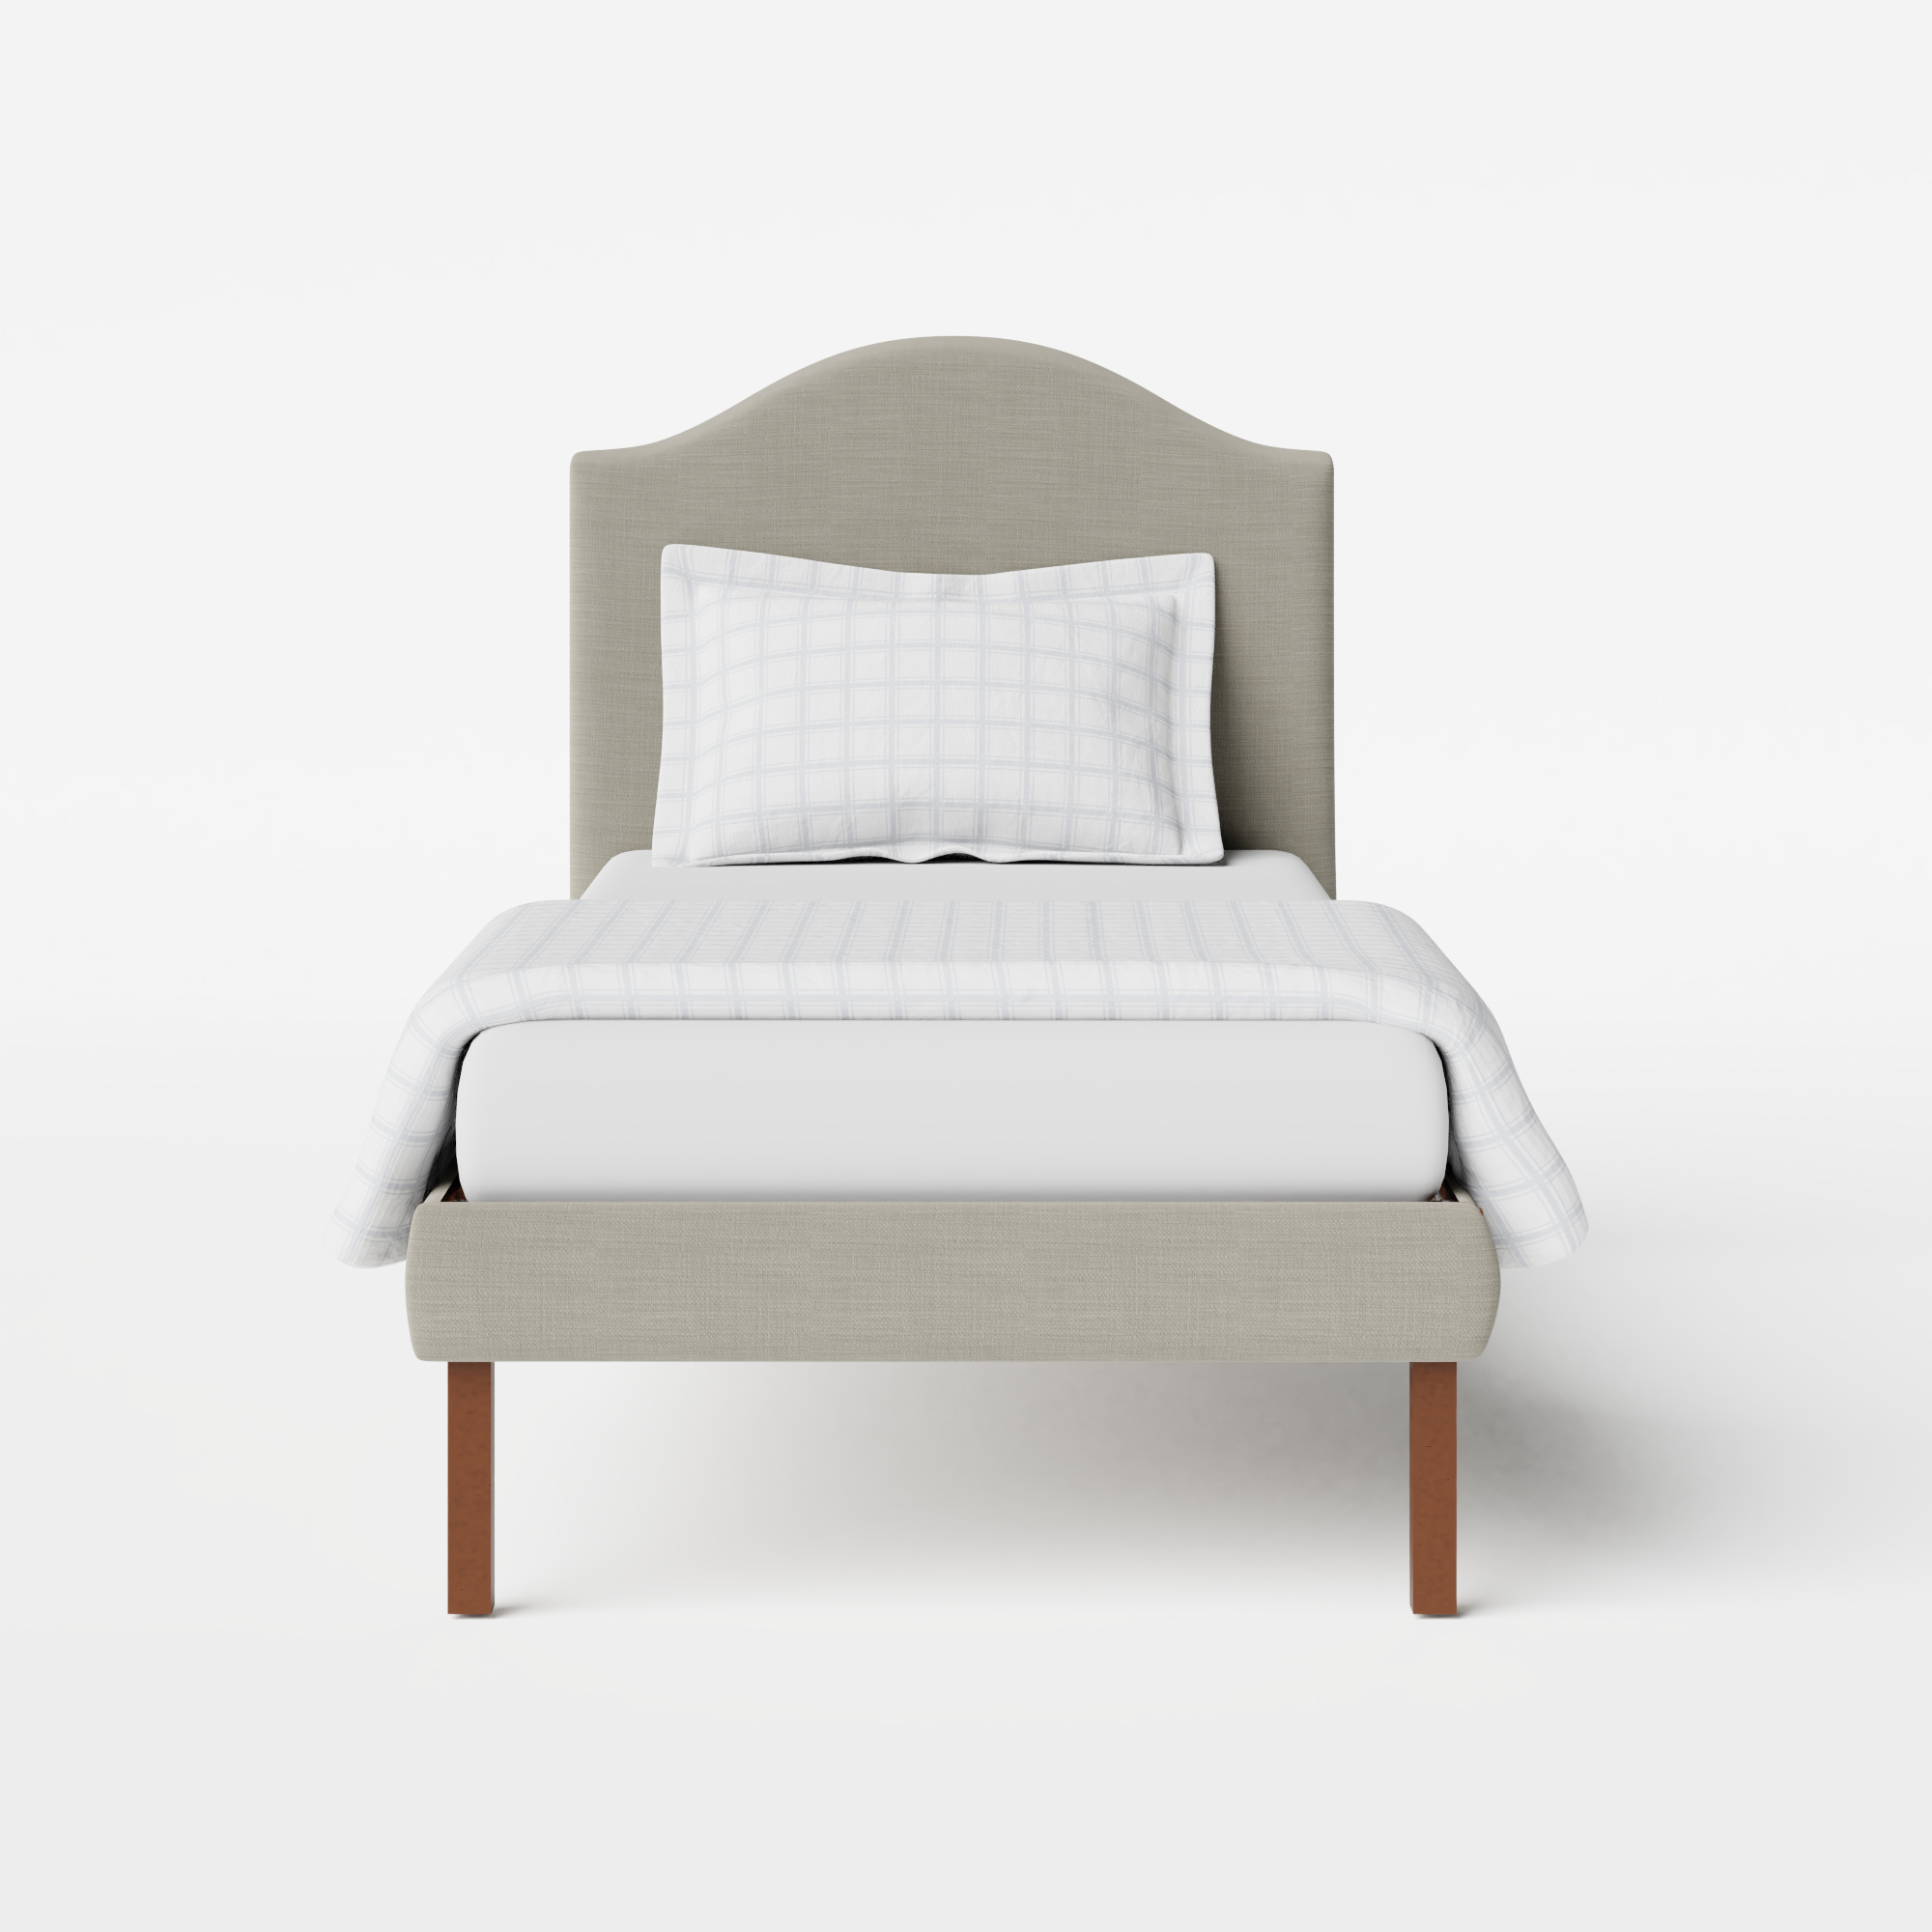 Yoshida Upholstered letto singolo imbottito in tessuto grigio